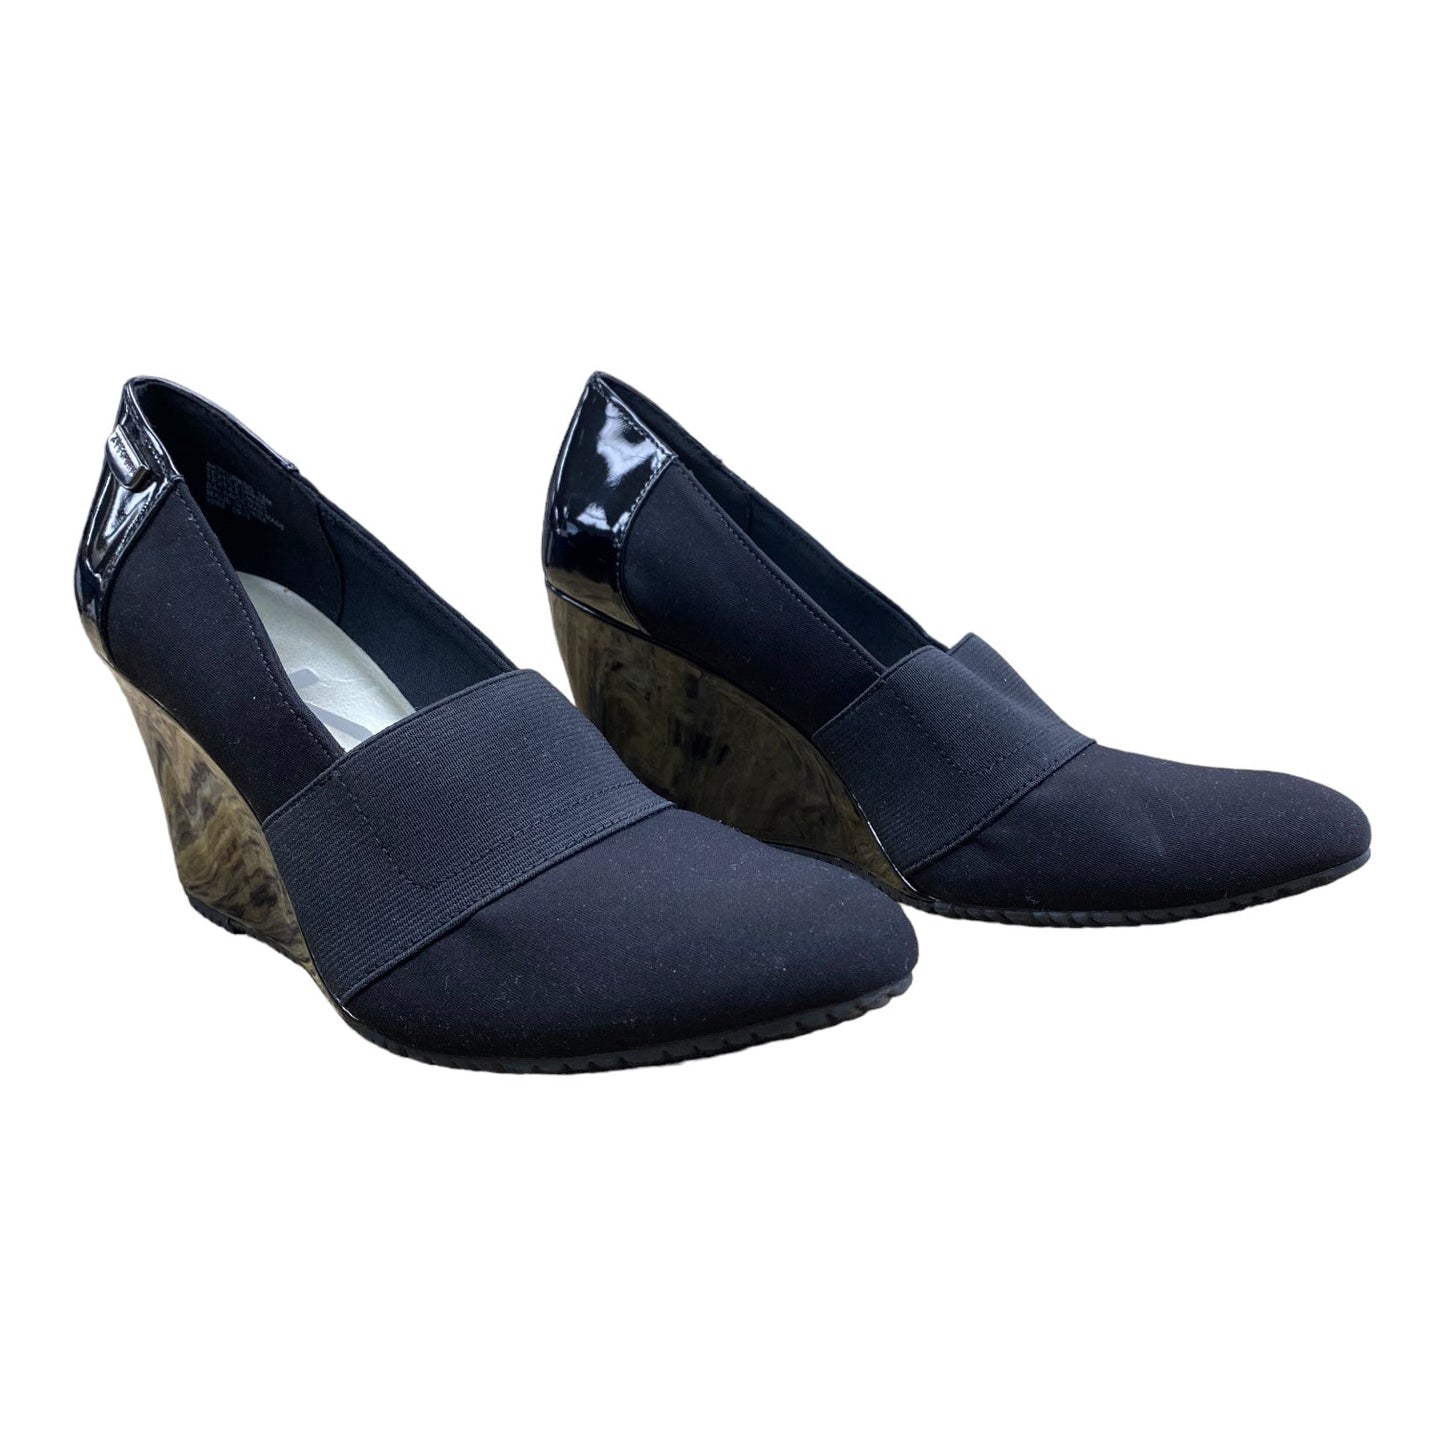 Black Shoes Heels Block Anne Klein, Size 7.5